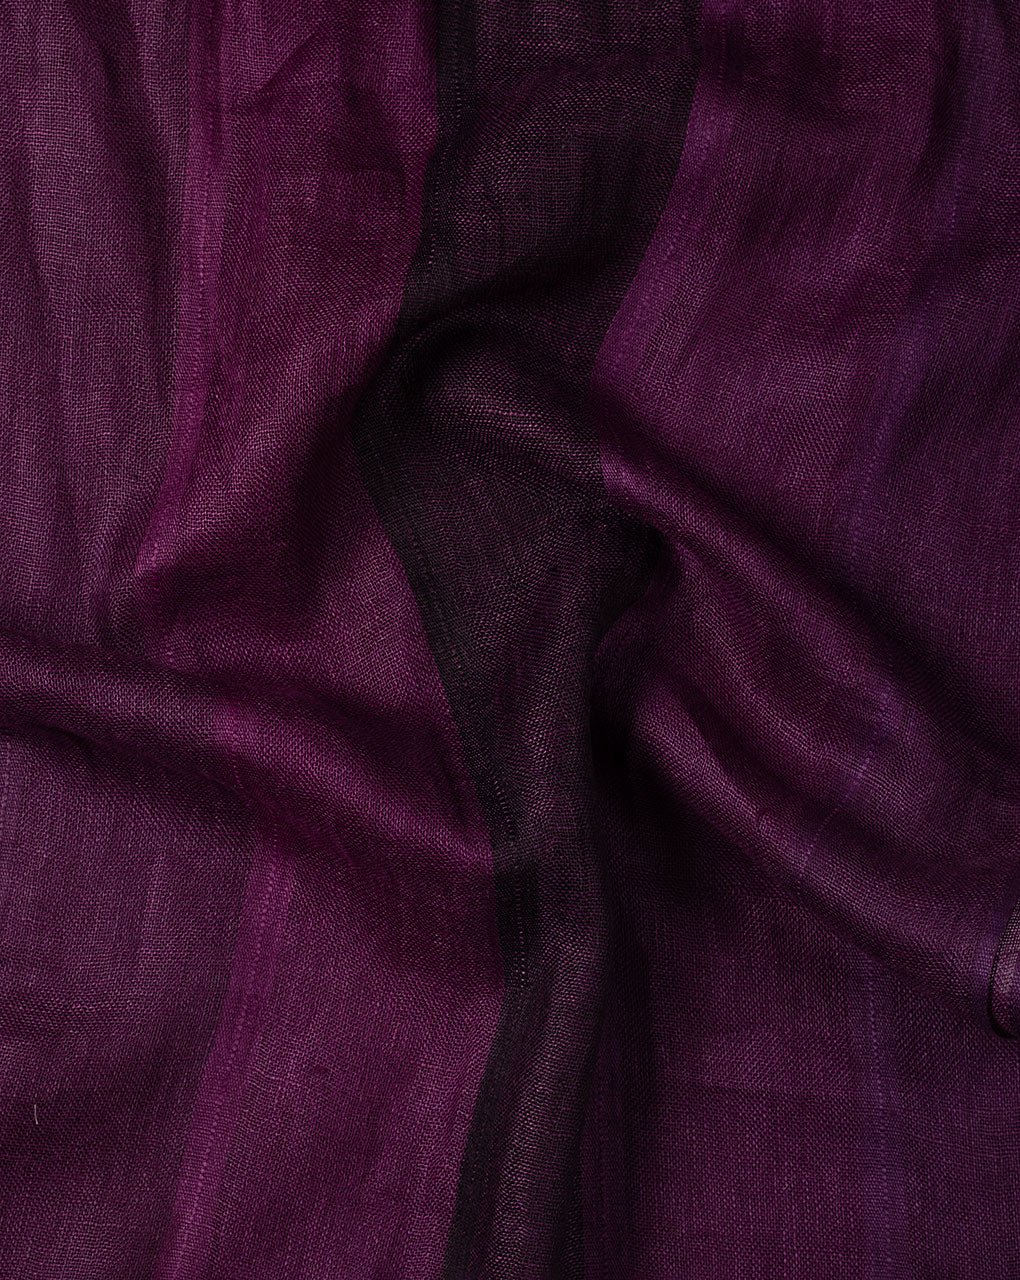 Purple Plain Woven Bhagalpuri Viscose Stole - Fabriclore.com